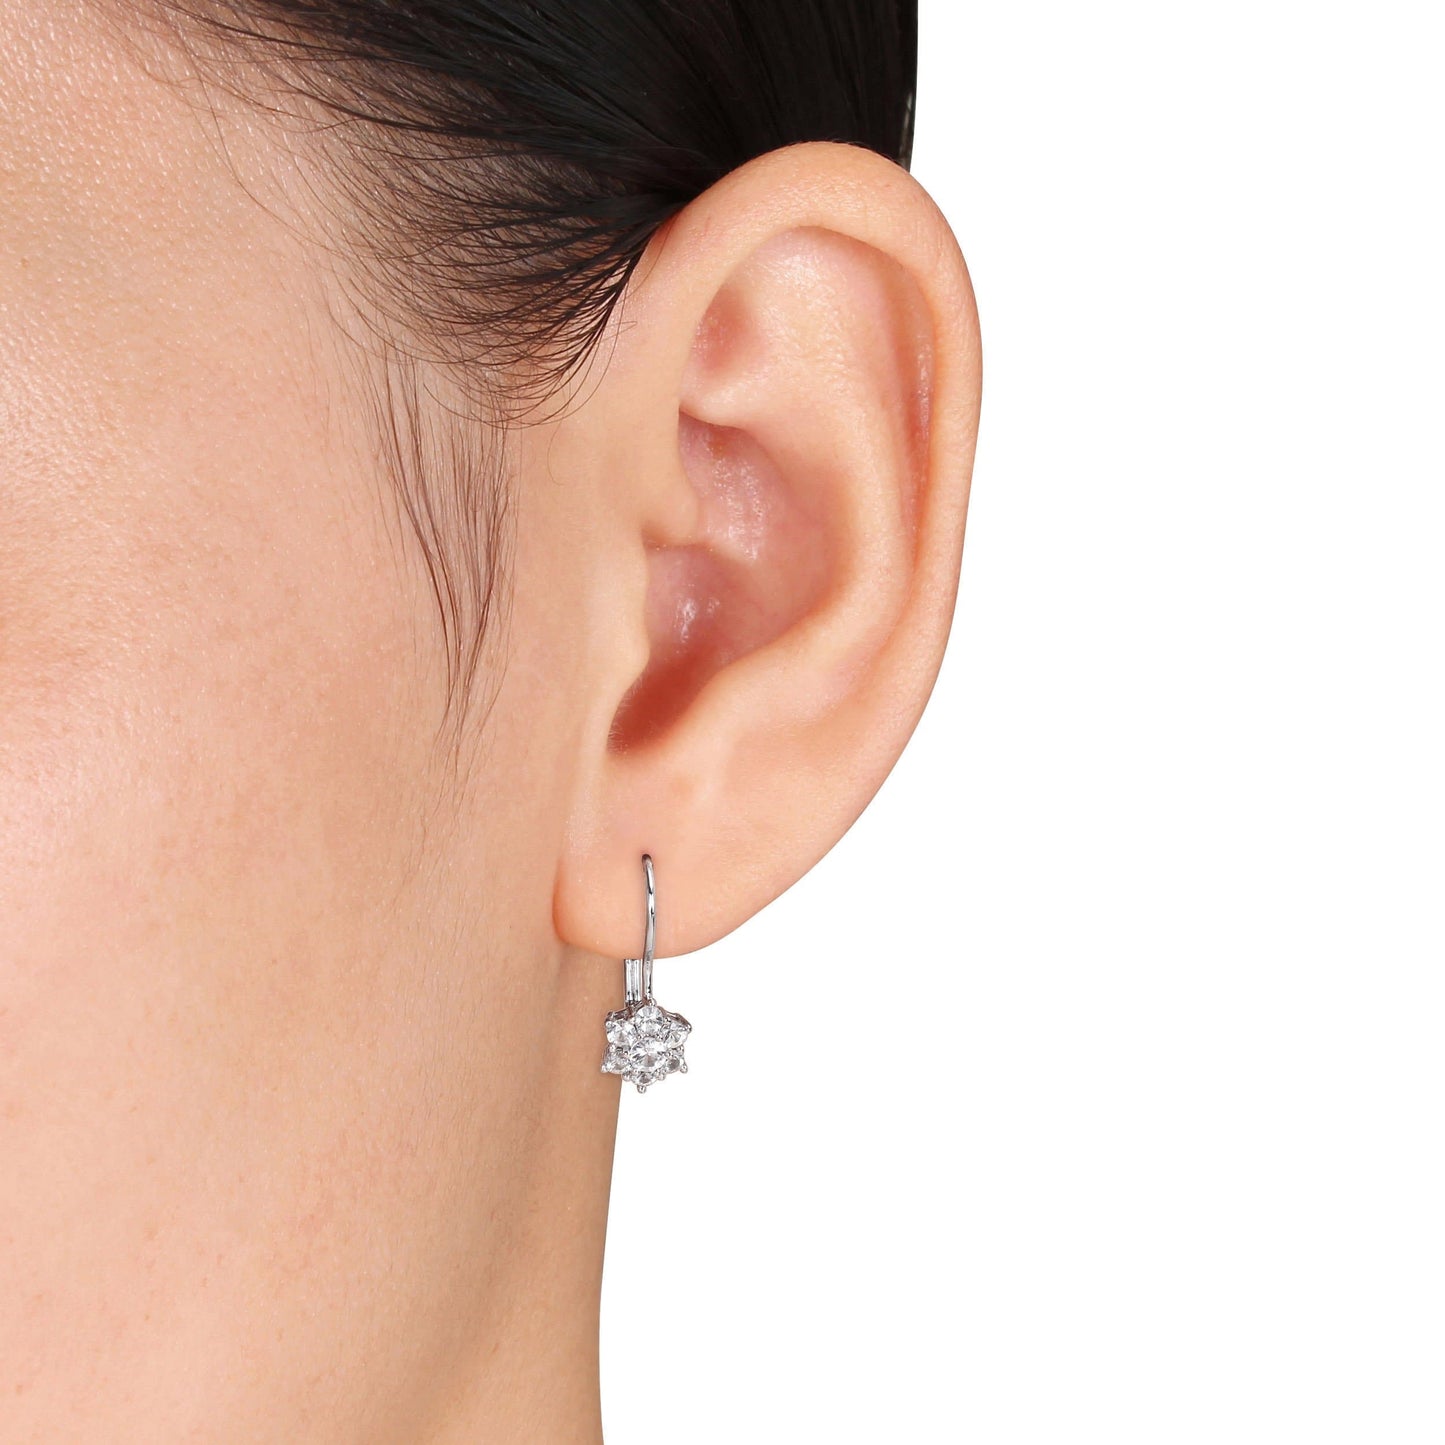 Sophia B 1ct White Sapphire Earrings